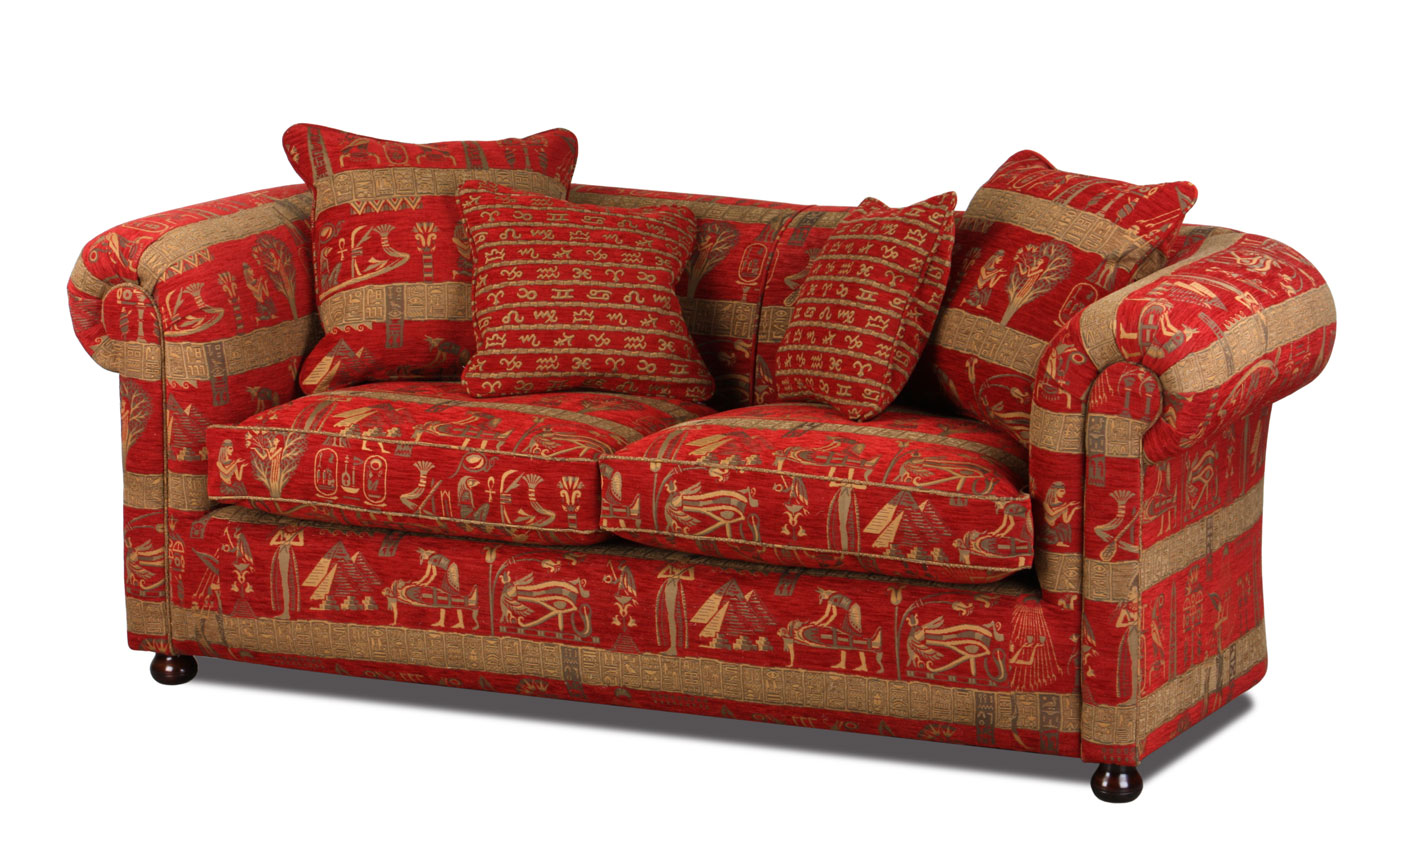 Bild vom Wellington Midi Sofa, das zum Sessel passt